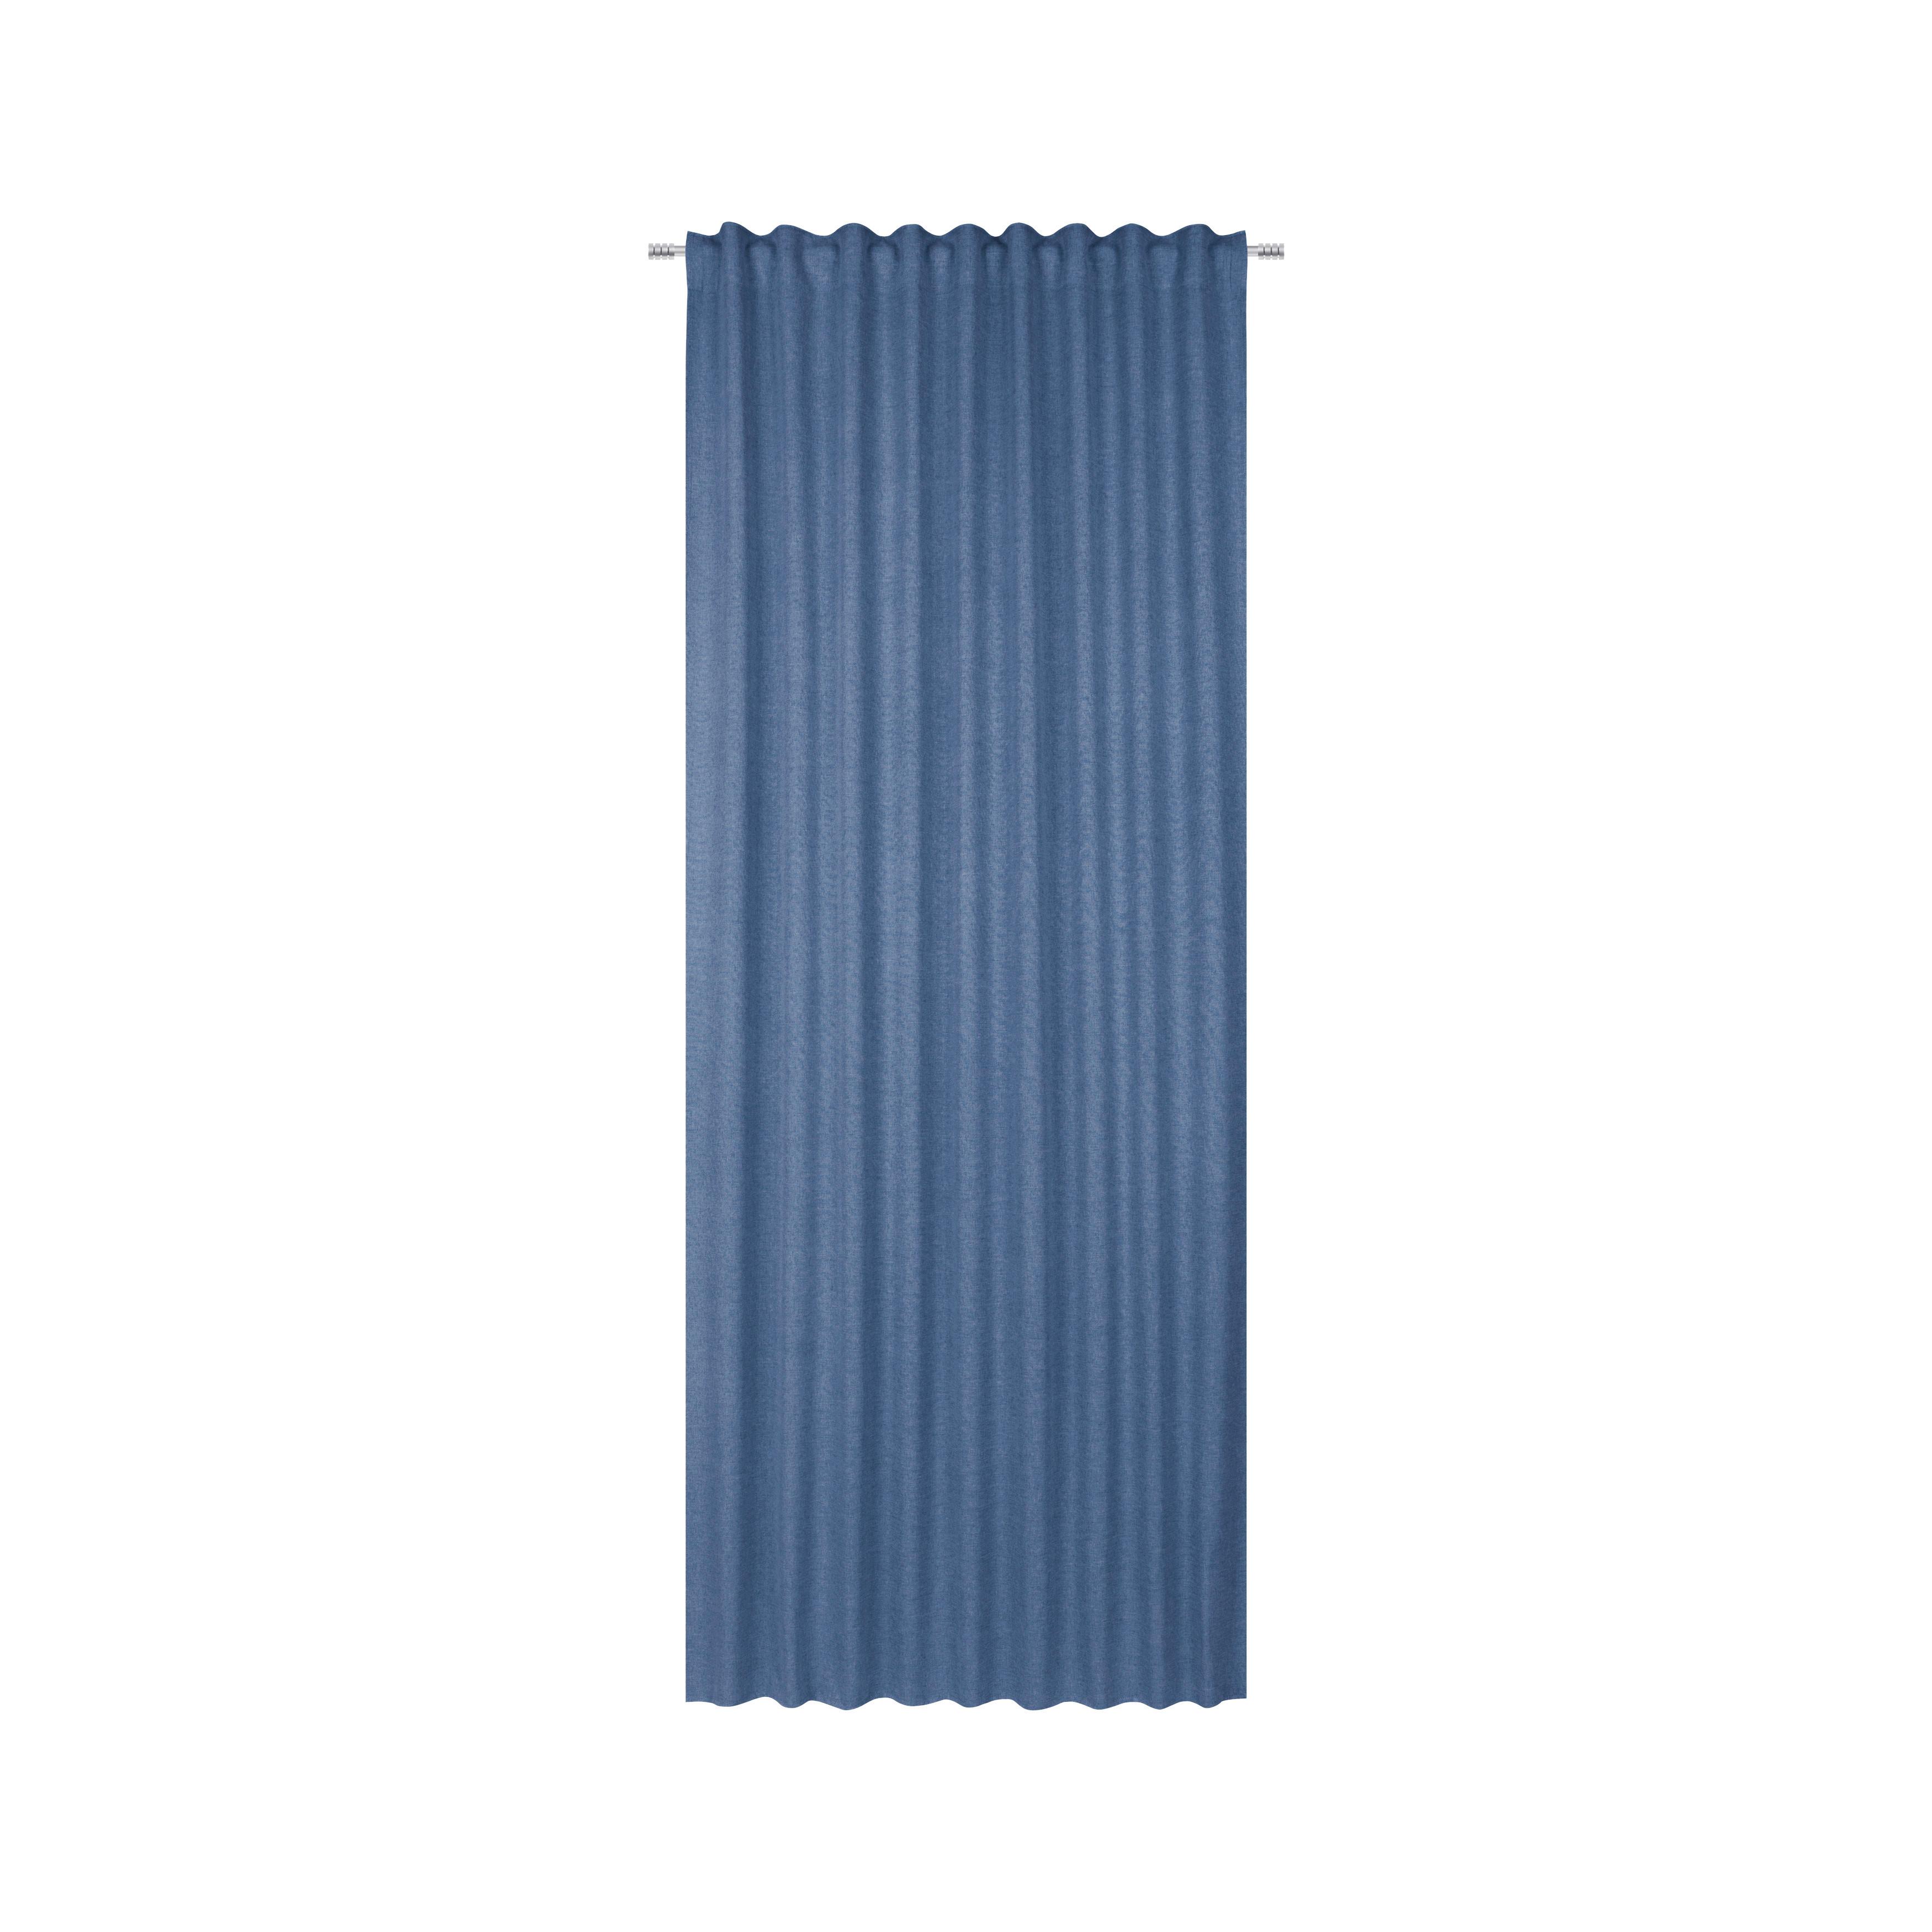 Fertigvorhang Ulrich ca. 135x245cm - Blau, Textil (135/245cm) - Modern Living